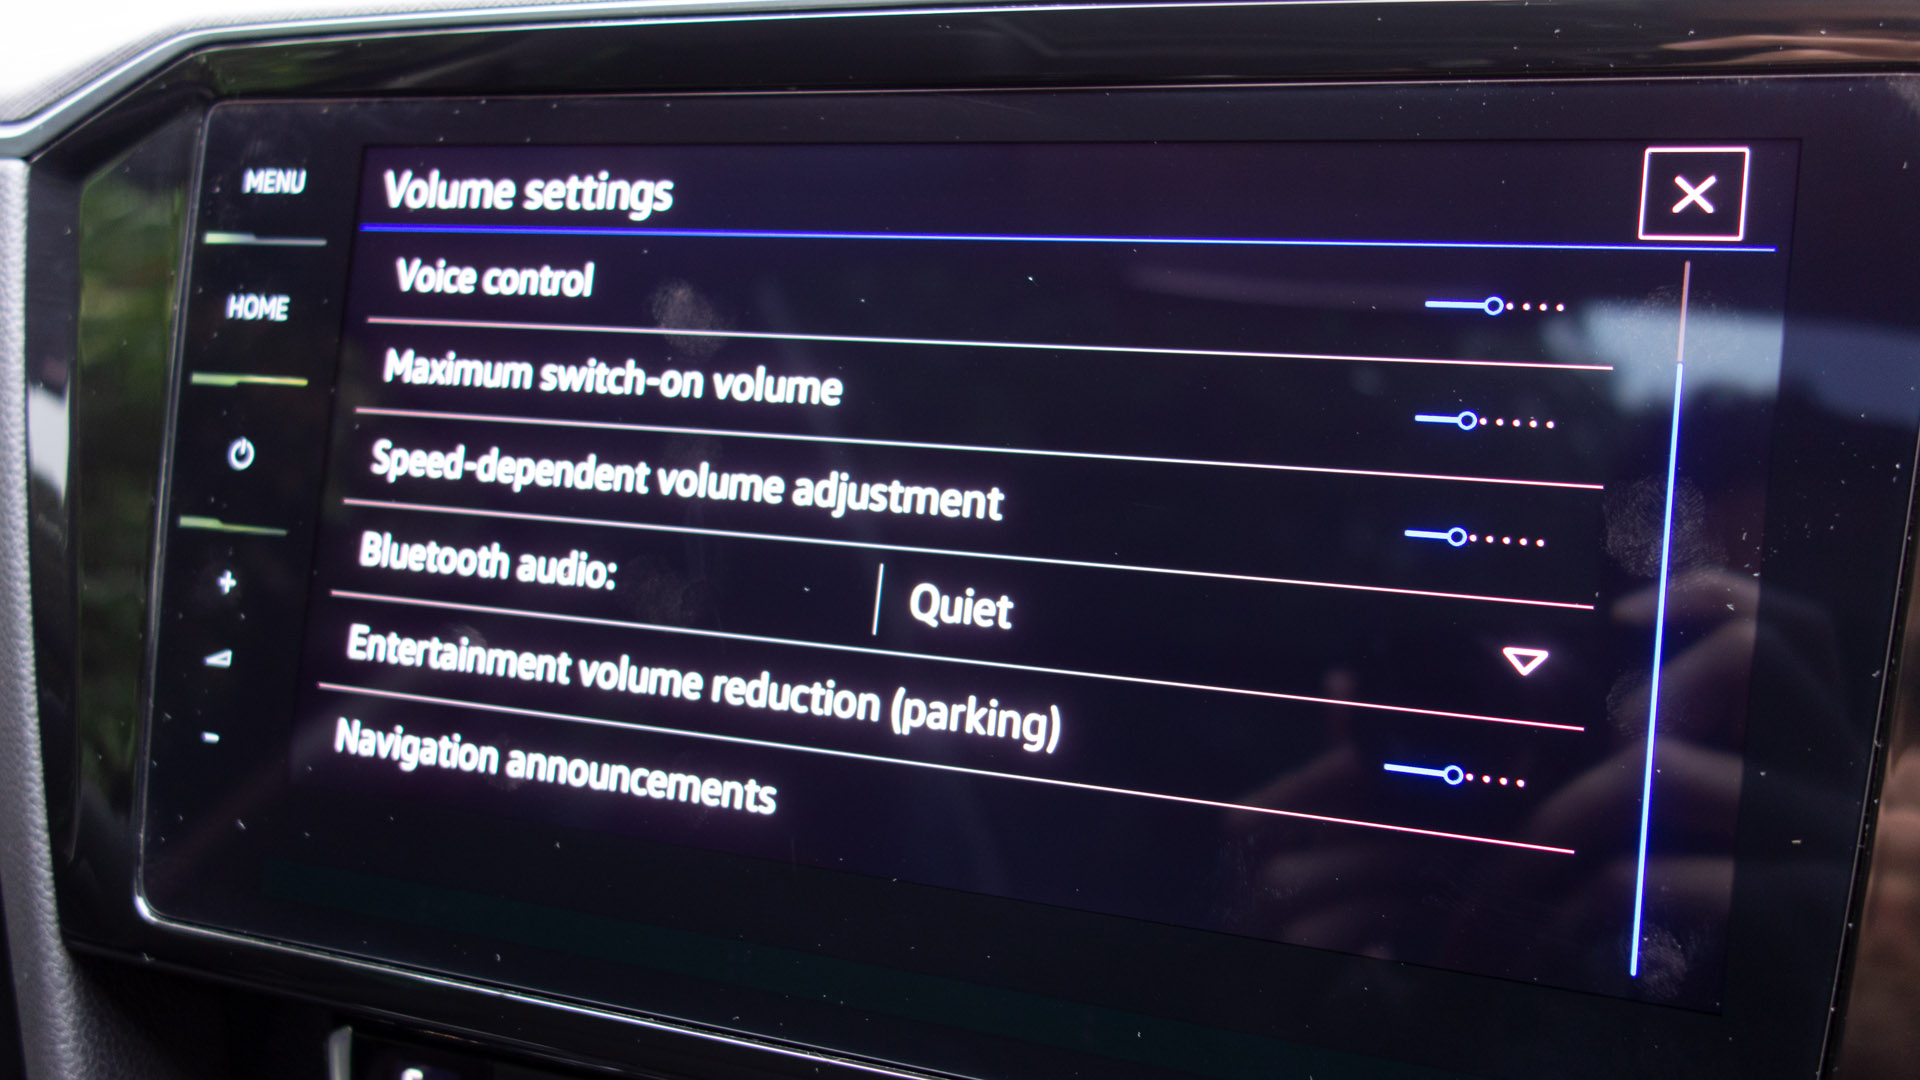 Volkswagen Passat Estate GTE audio settings